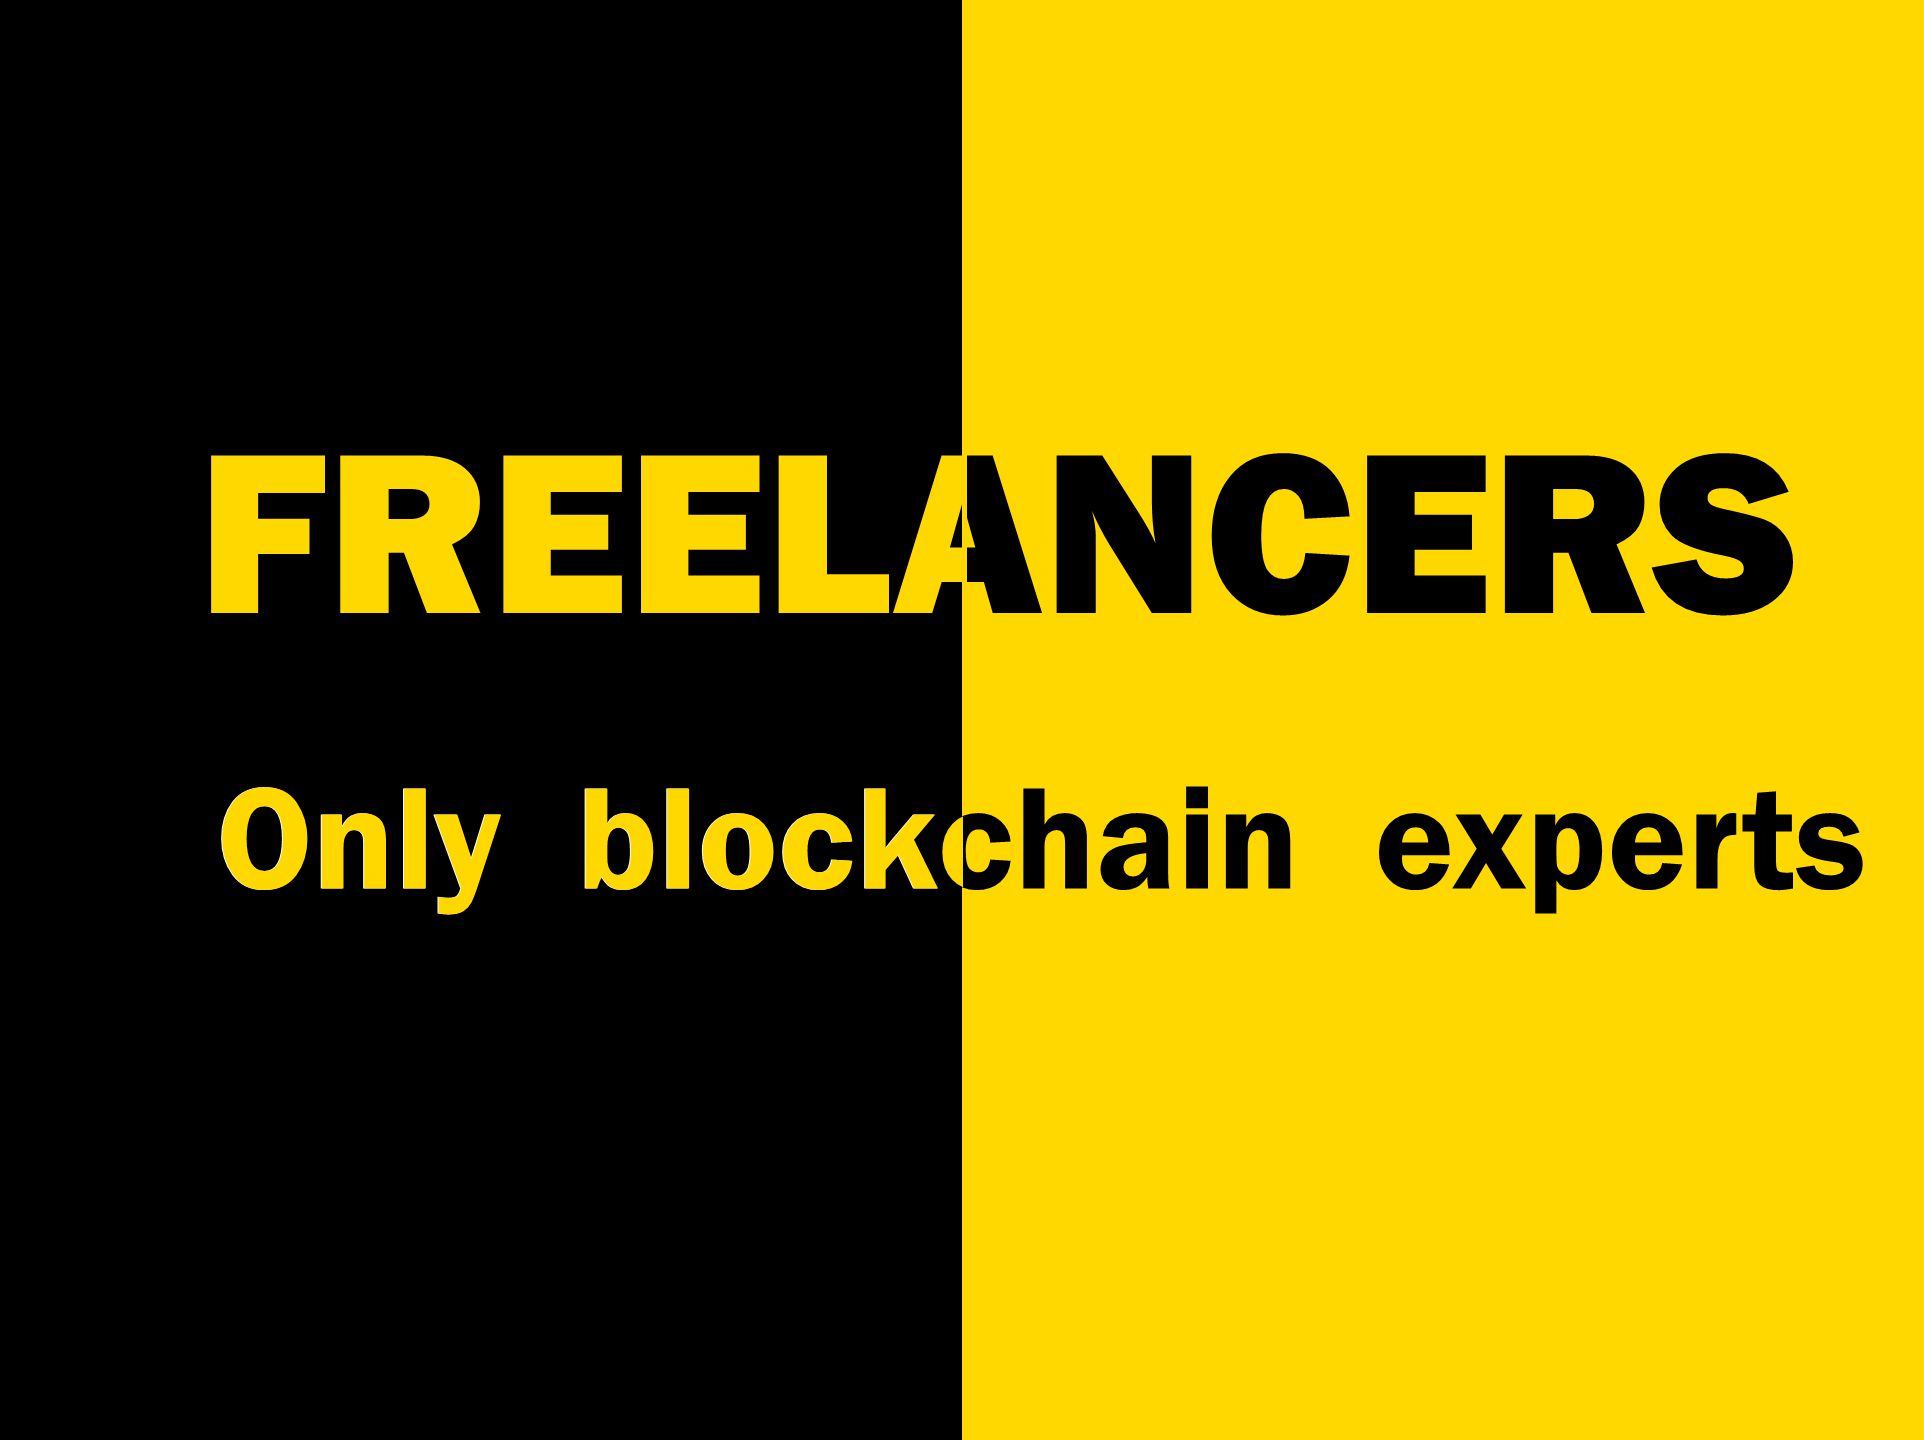 blockchain freelancers can find job here